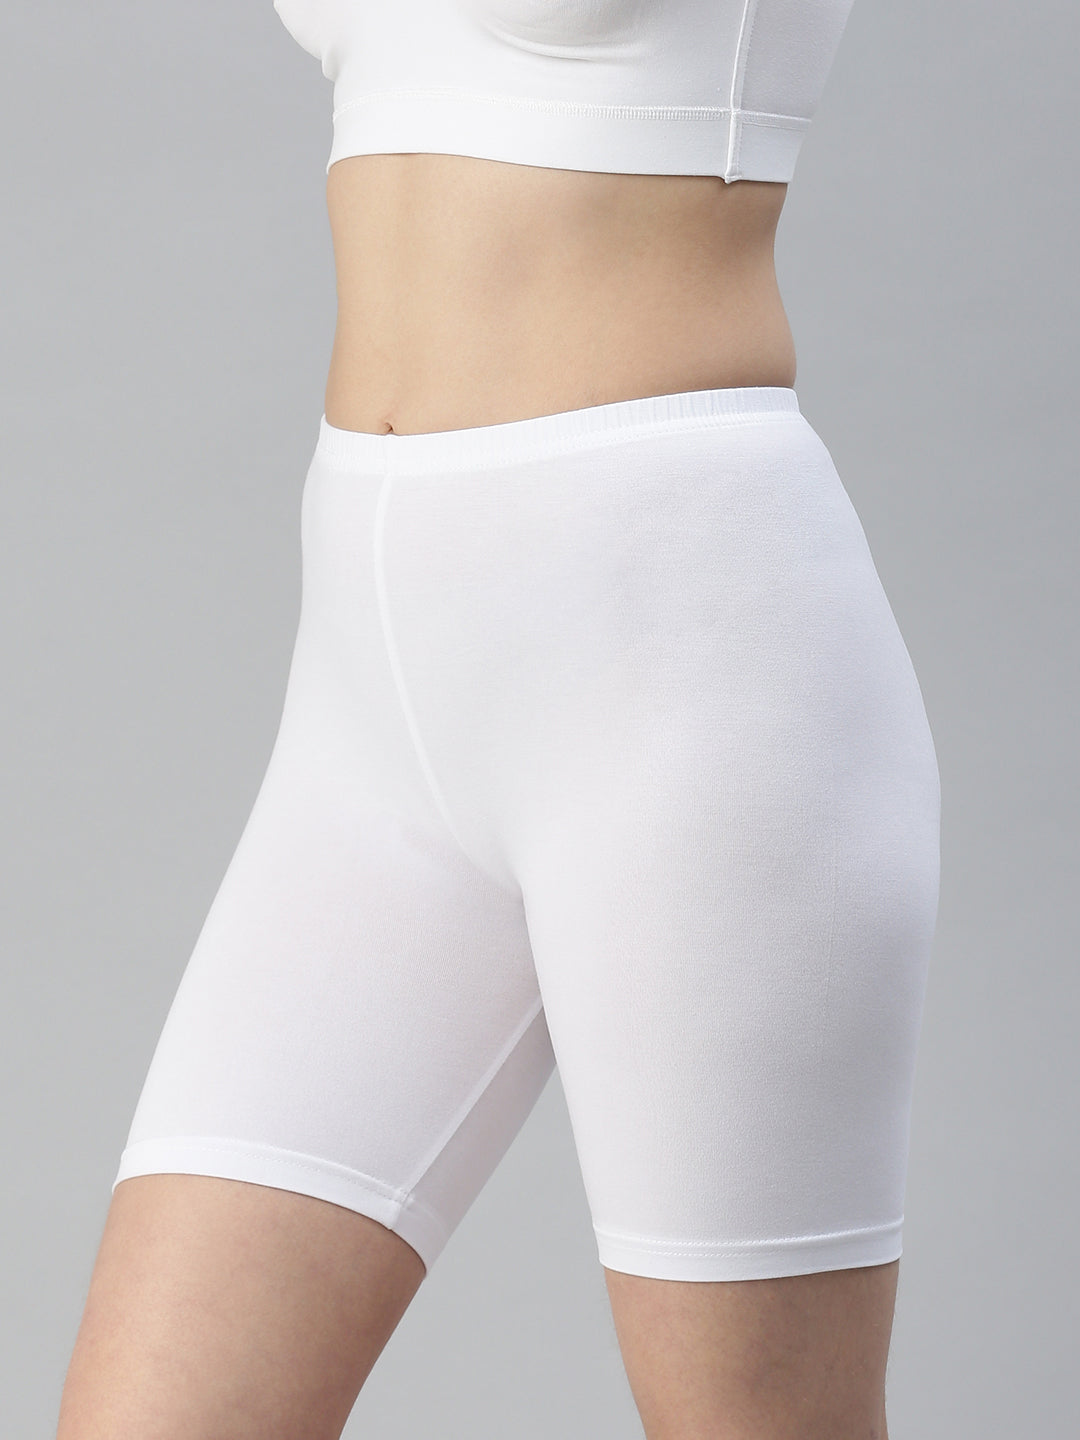 Prisma's White Yoga Shorts for Comfortable Workout